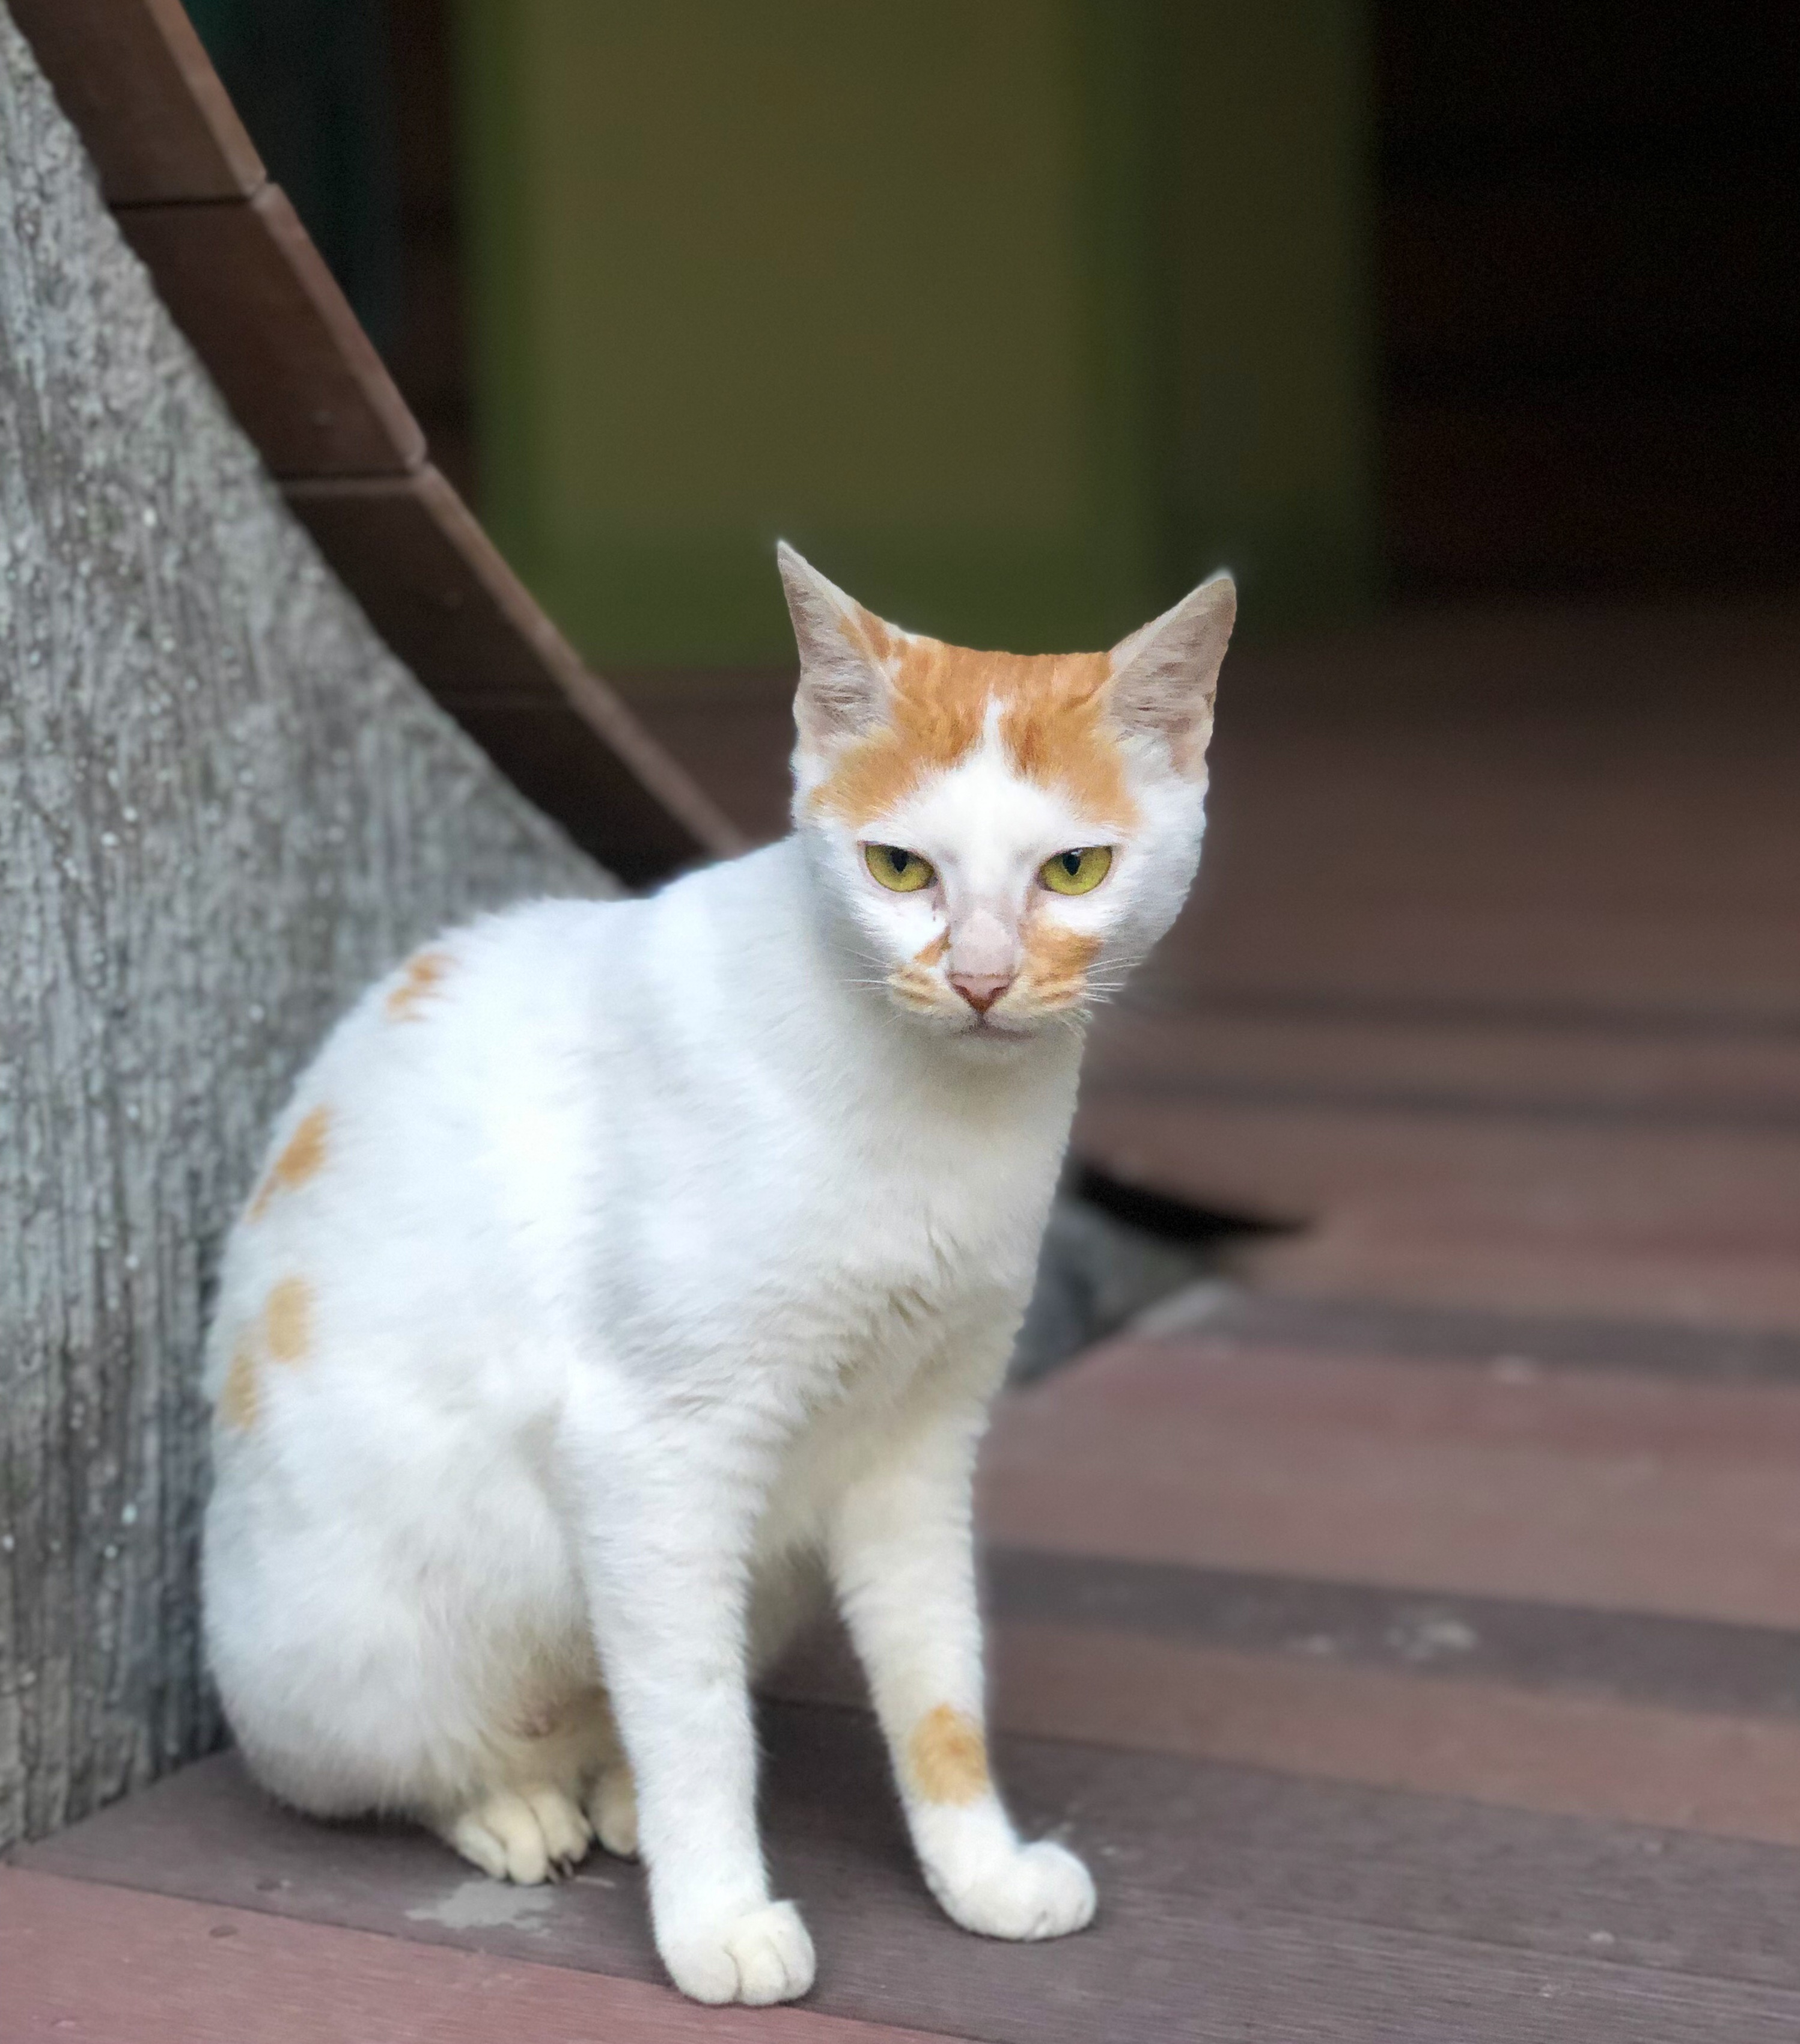 Cat | 2019.07 at Haining, China